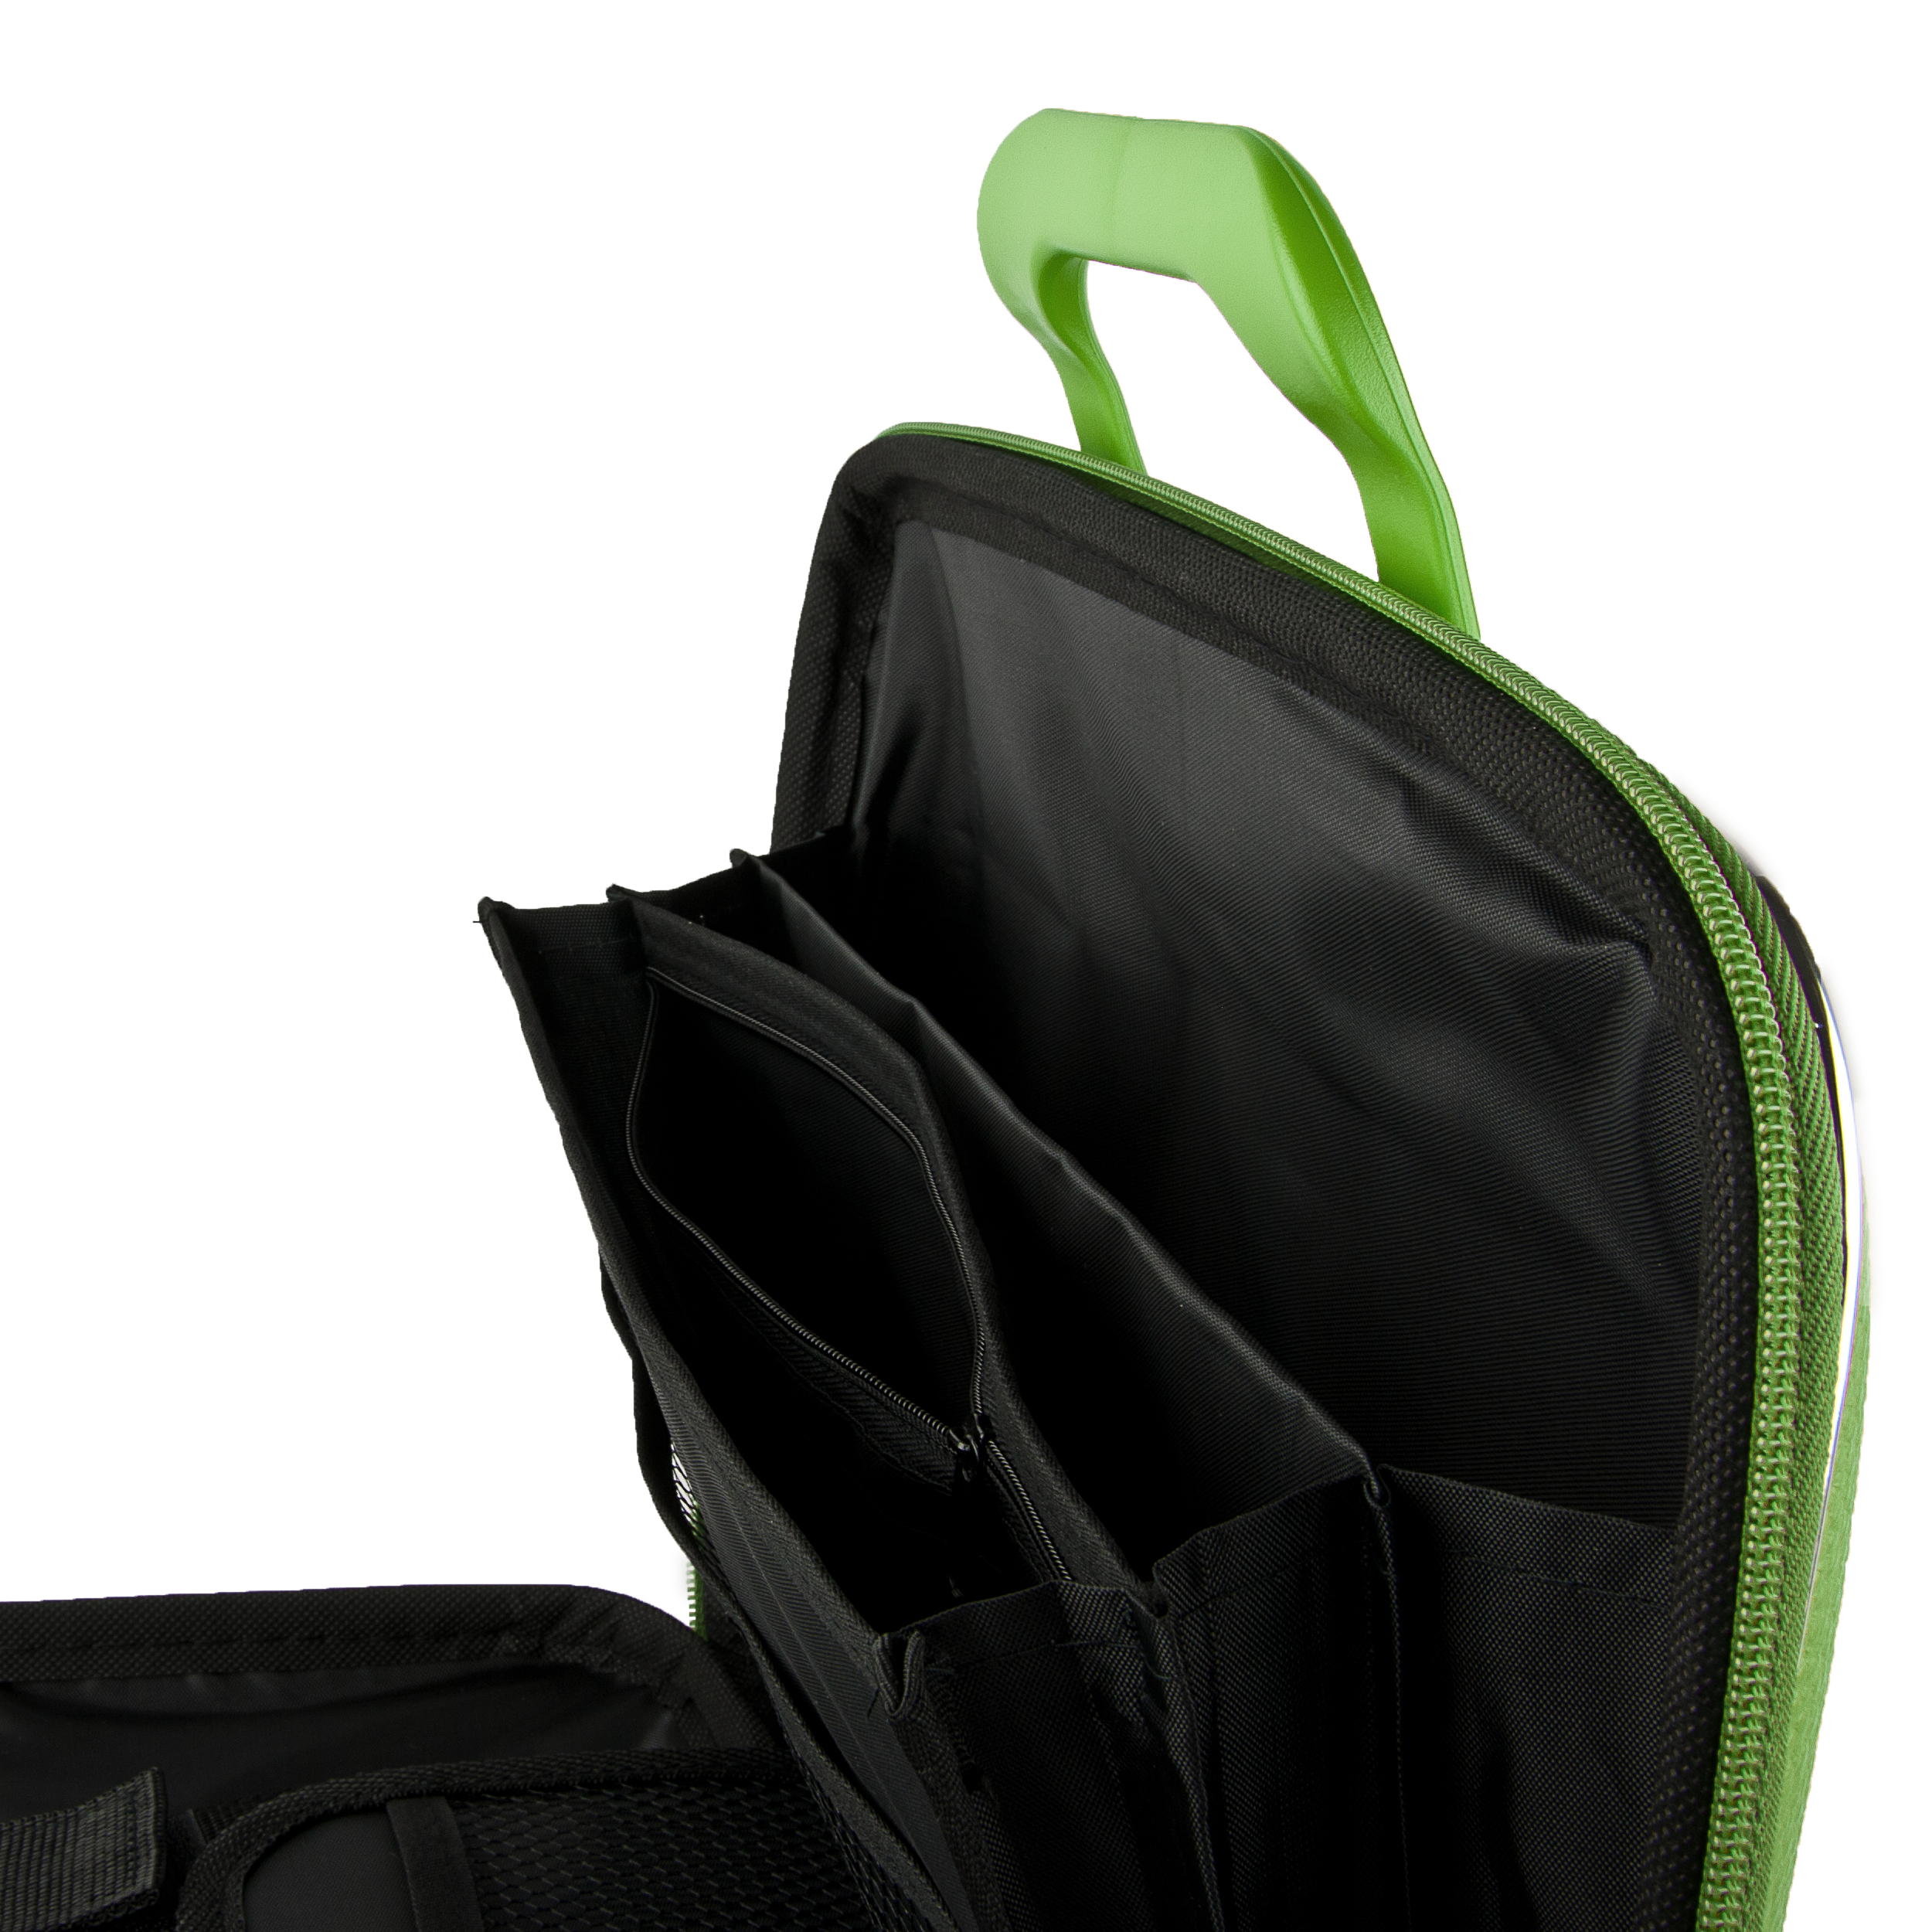 sumaclife Cady Laptop Bag /w adjustable shoulder strap fits Asus Convertible Transformer Book 10.1 inch Laptops 